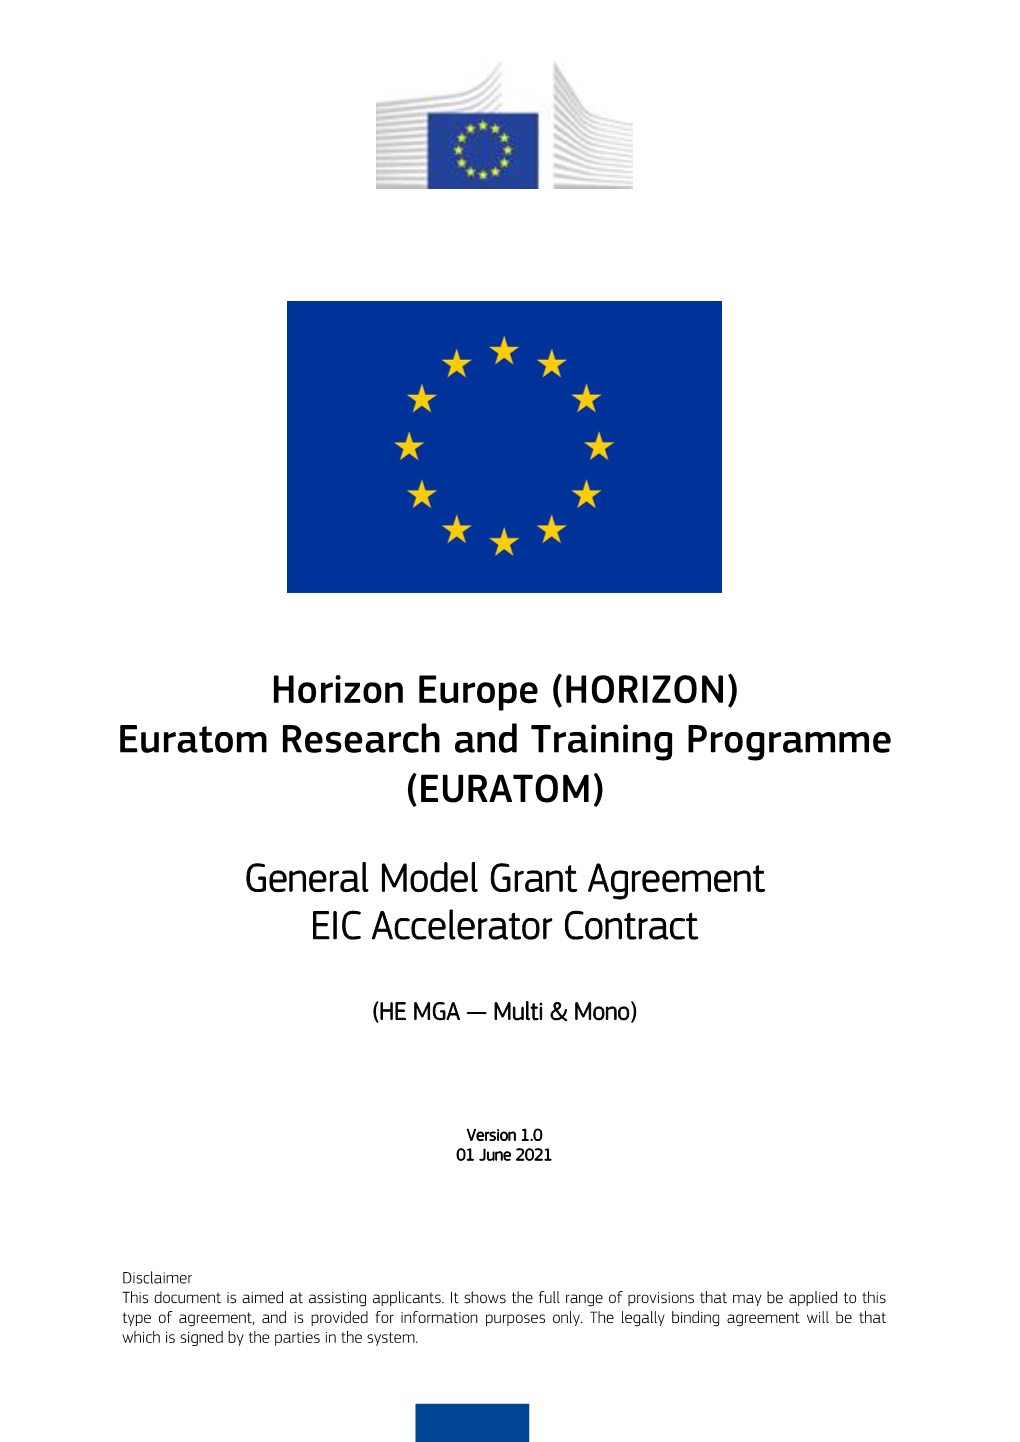 (EURATOM) General Model Grant Agreement EIC Accelerator Contrac